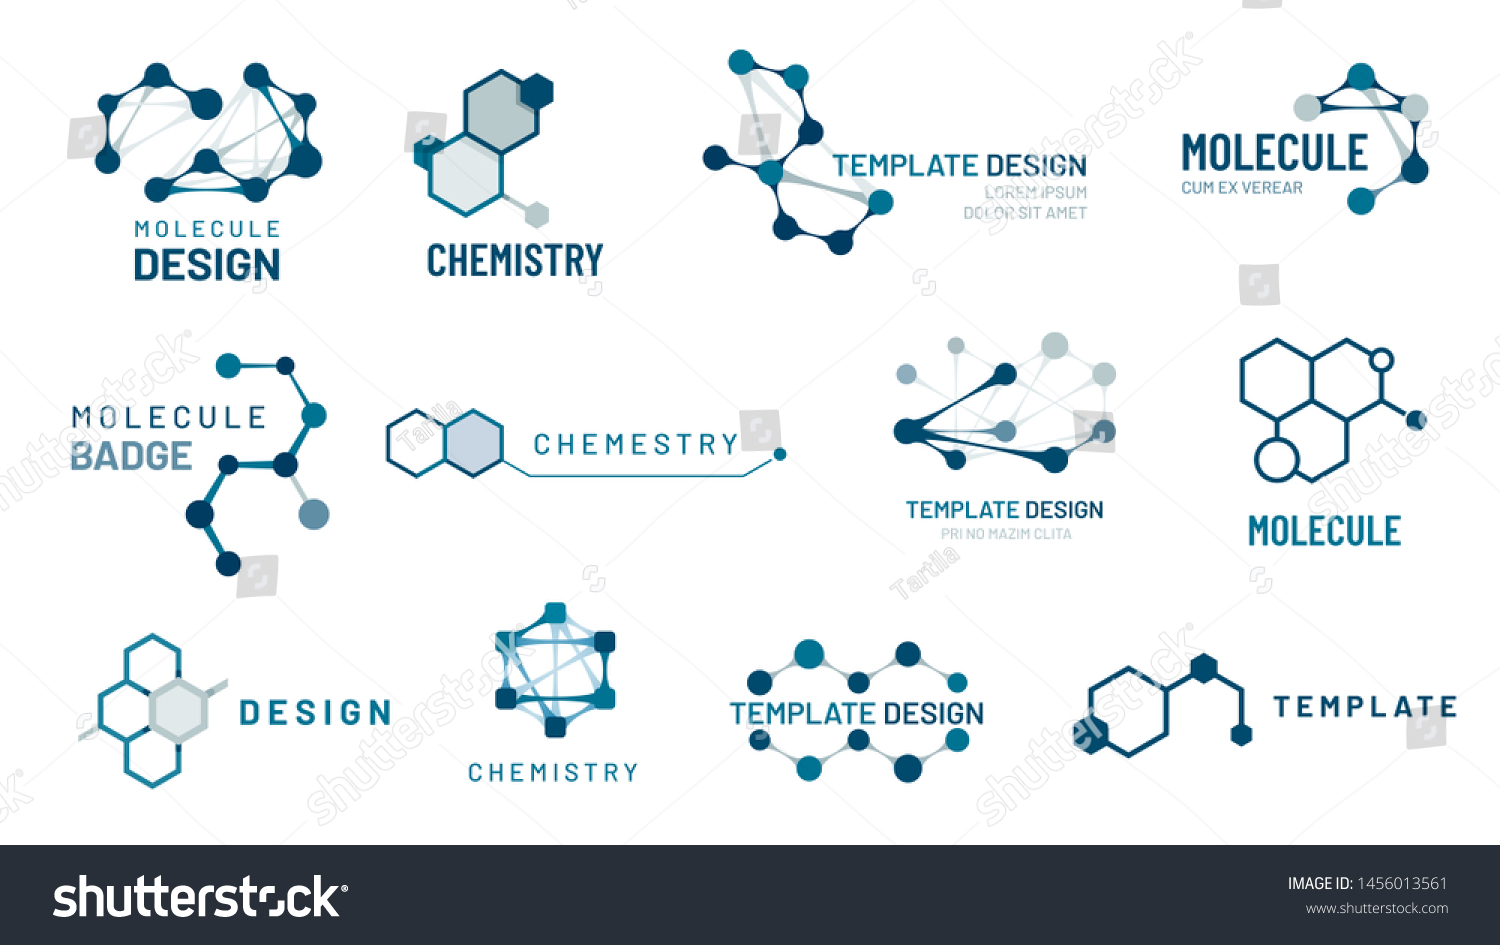 Hexagonal molecule badge. Molecular structure logo, molecular grids and chemistry hexagon molecules templates. Dna macromolecule, science bio code logo. Isolated vector symbols set #1456013561